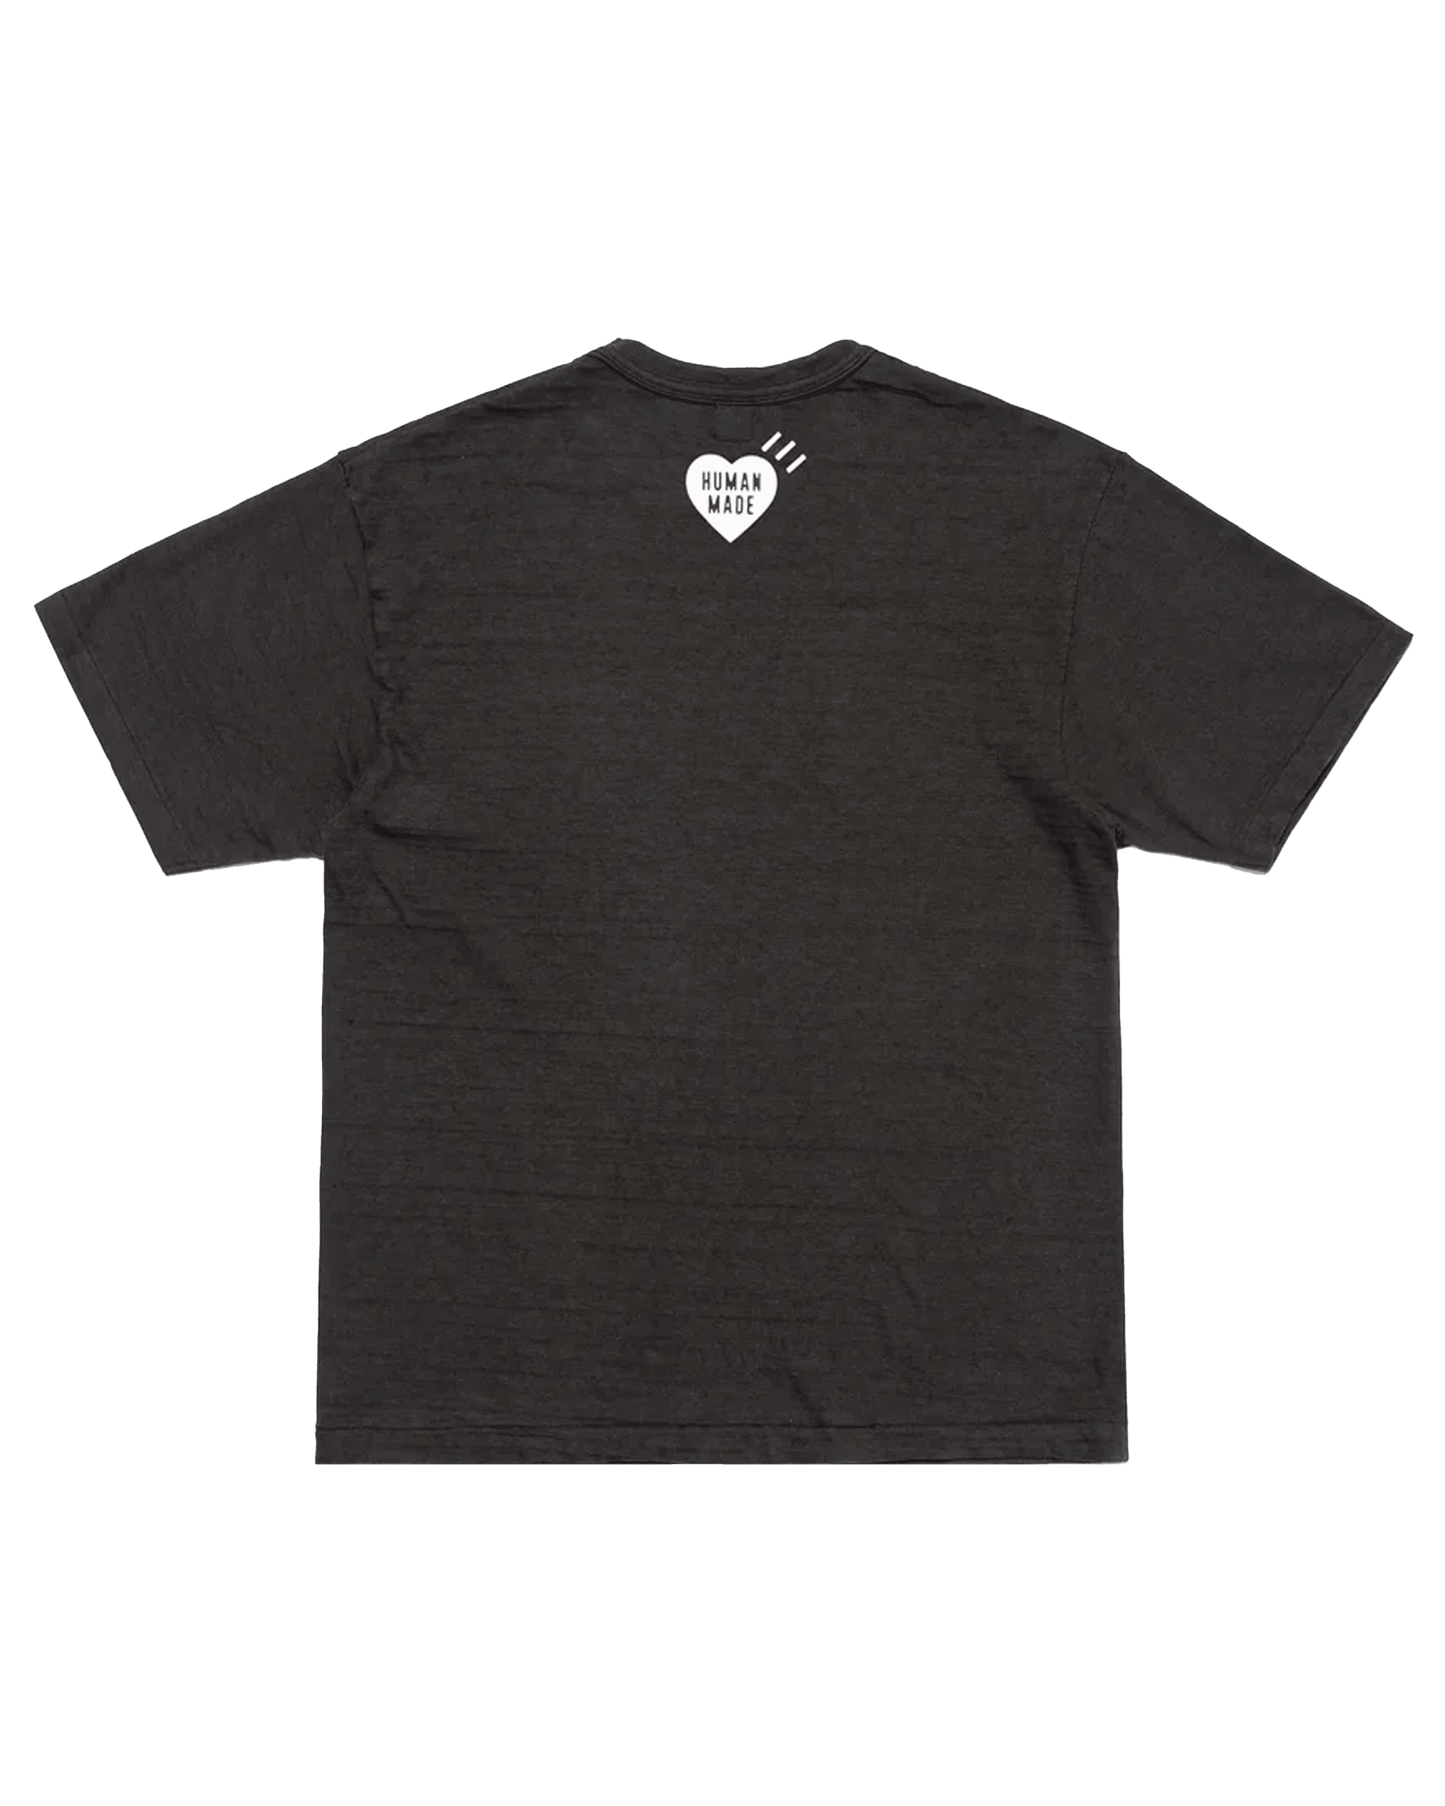 Graphic T-Shirt #18 - Human Made